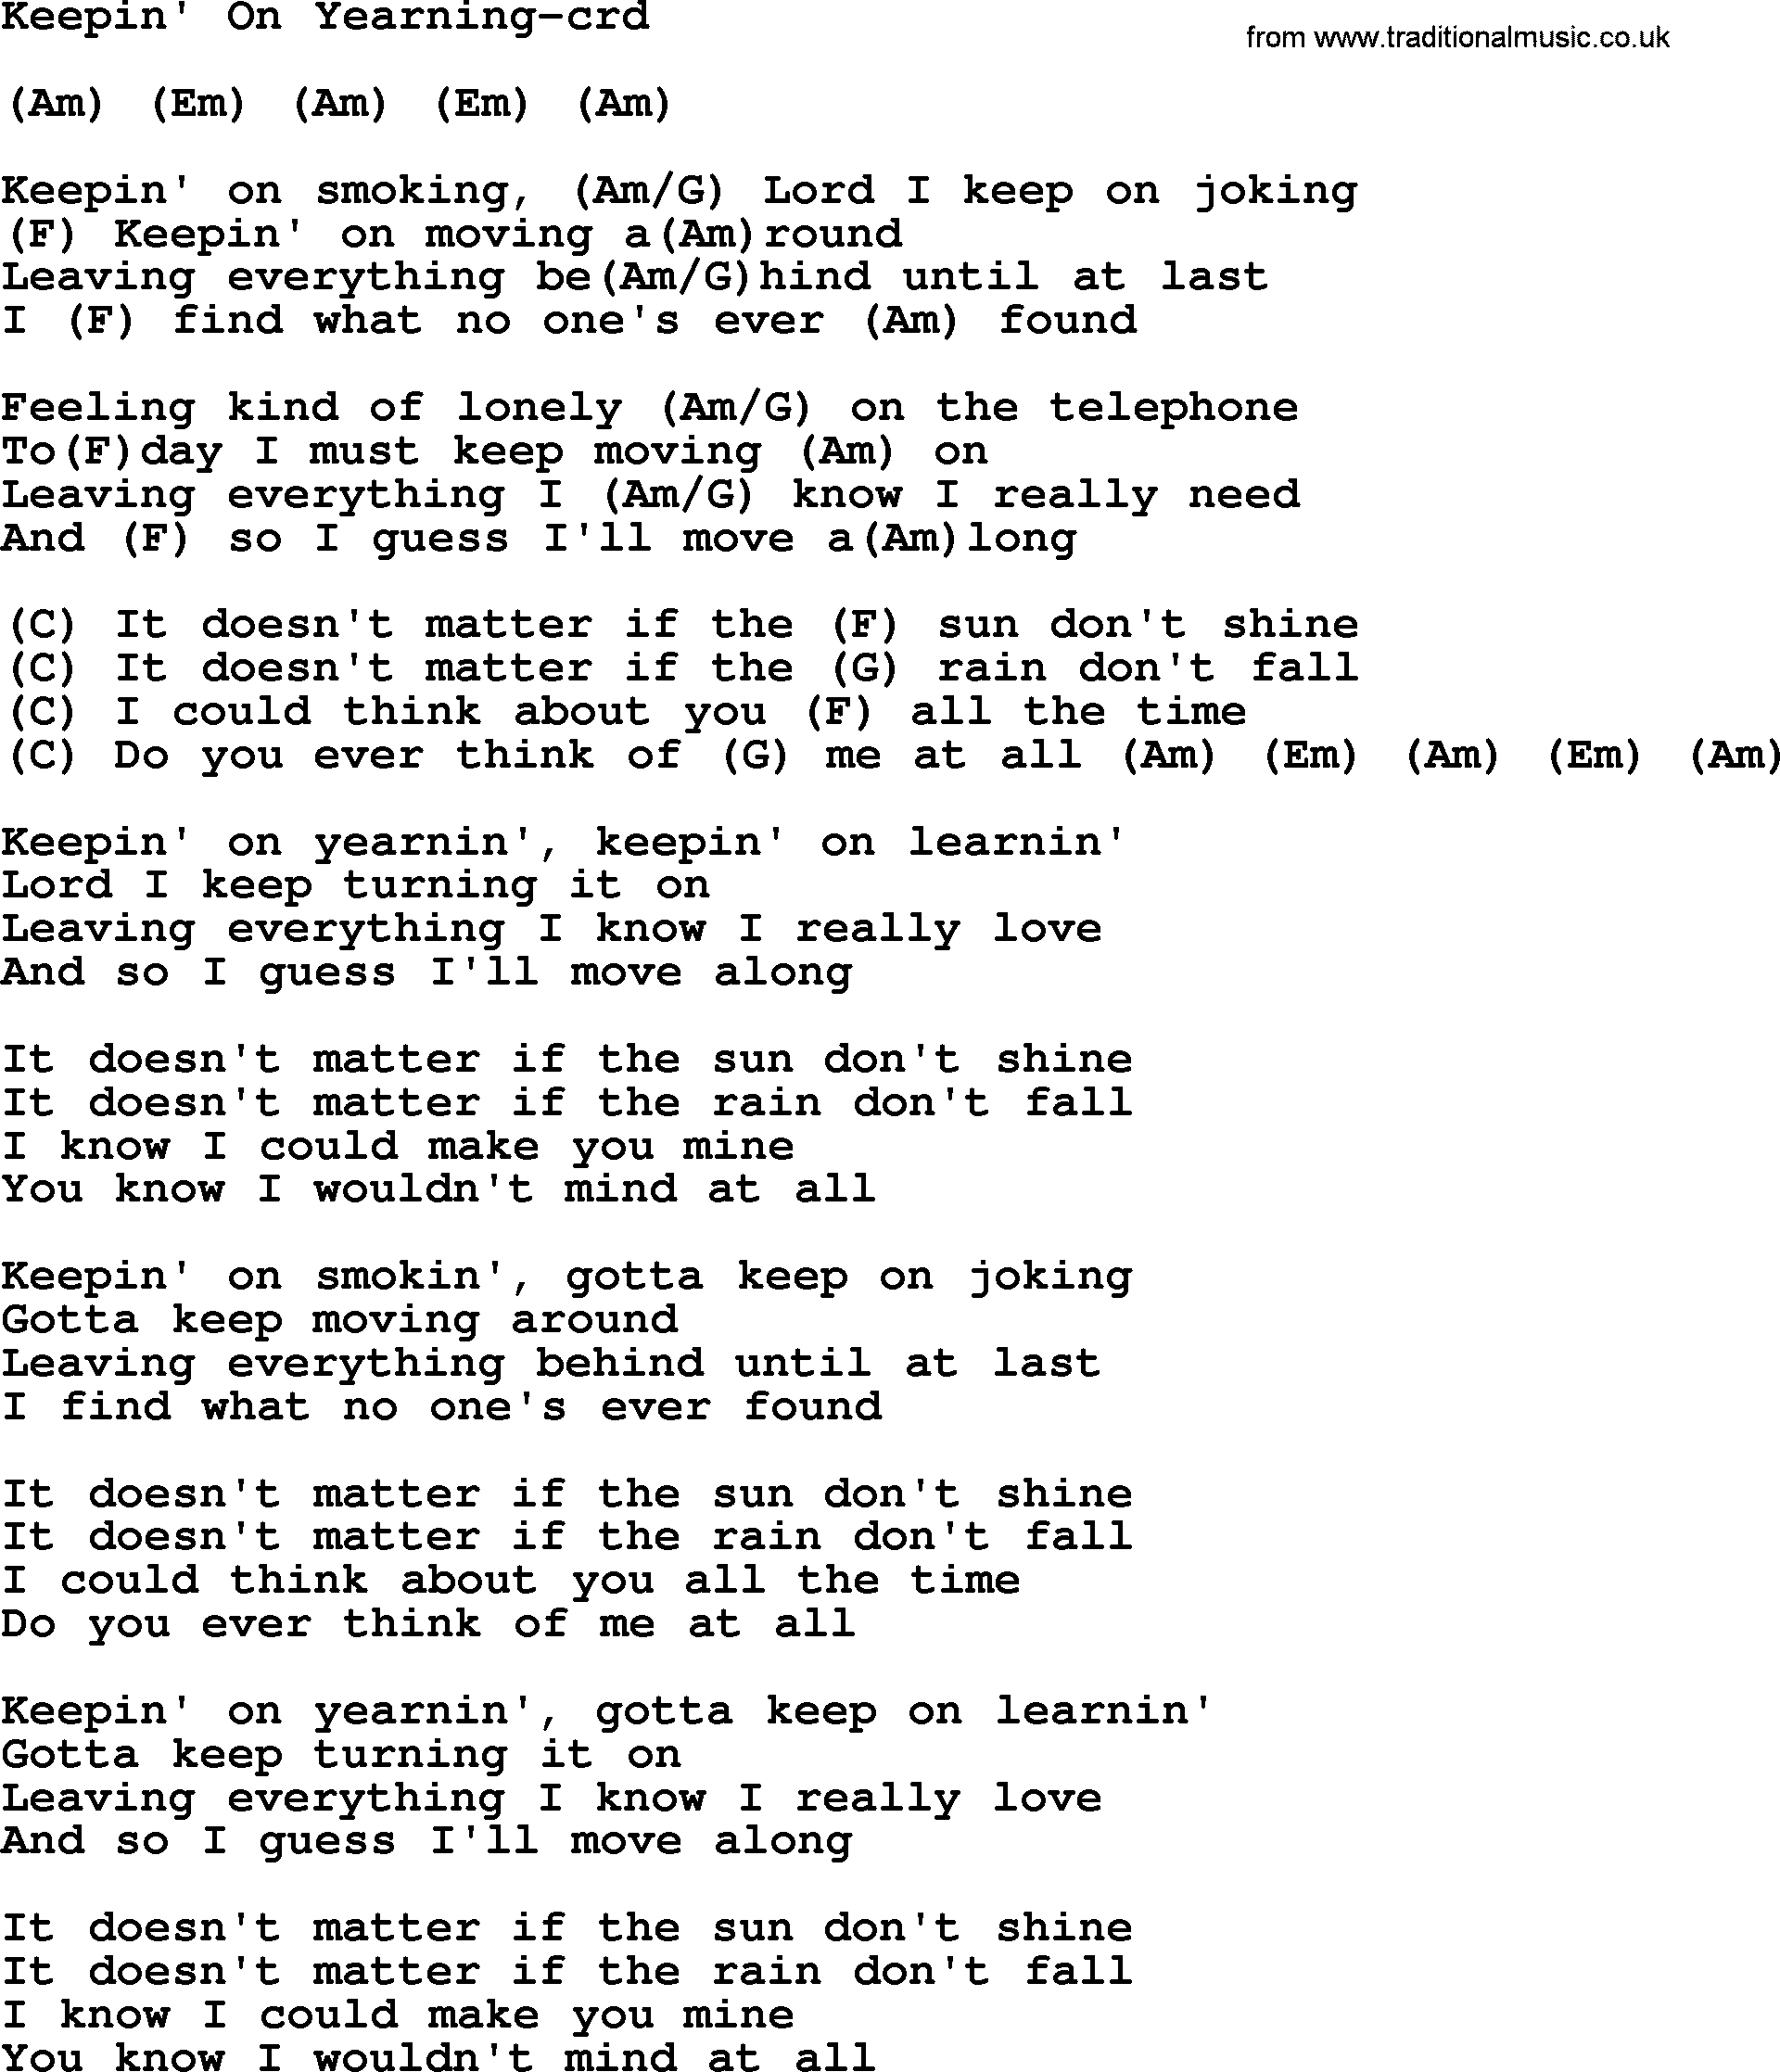 Gordon Lightfoot song Keepin' On Yearning, lyrics and chords